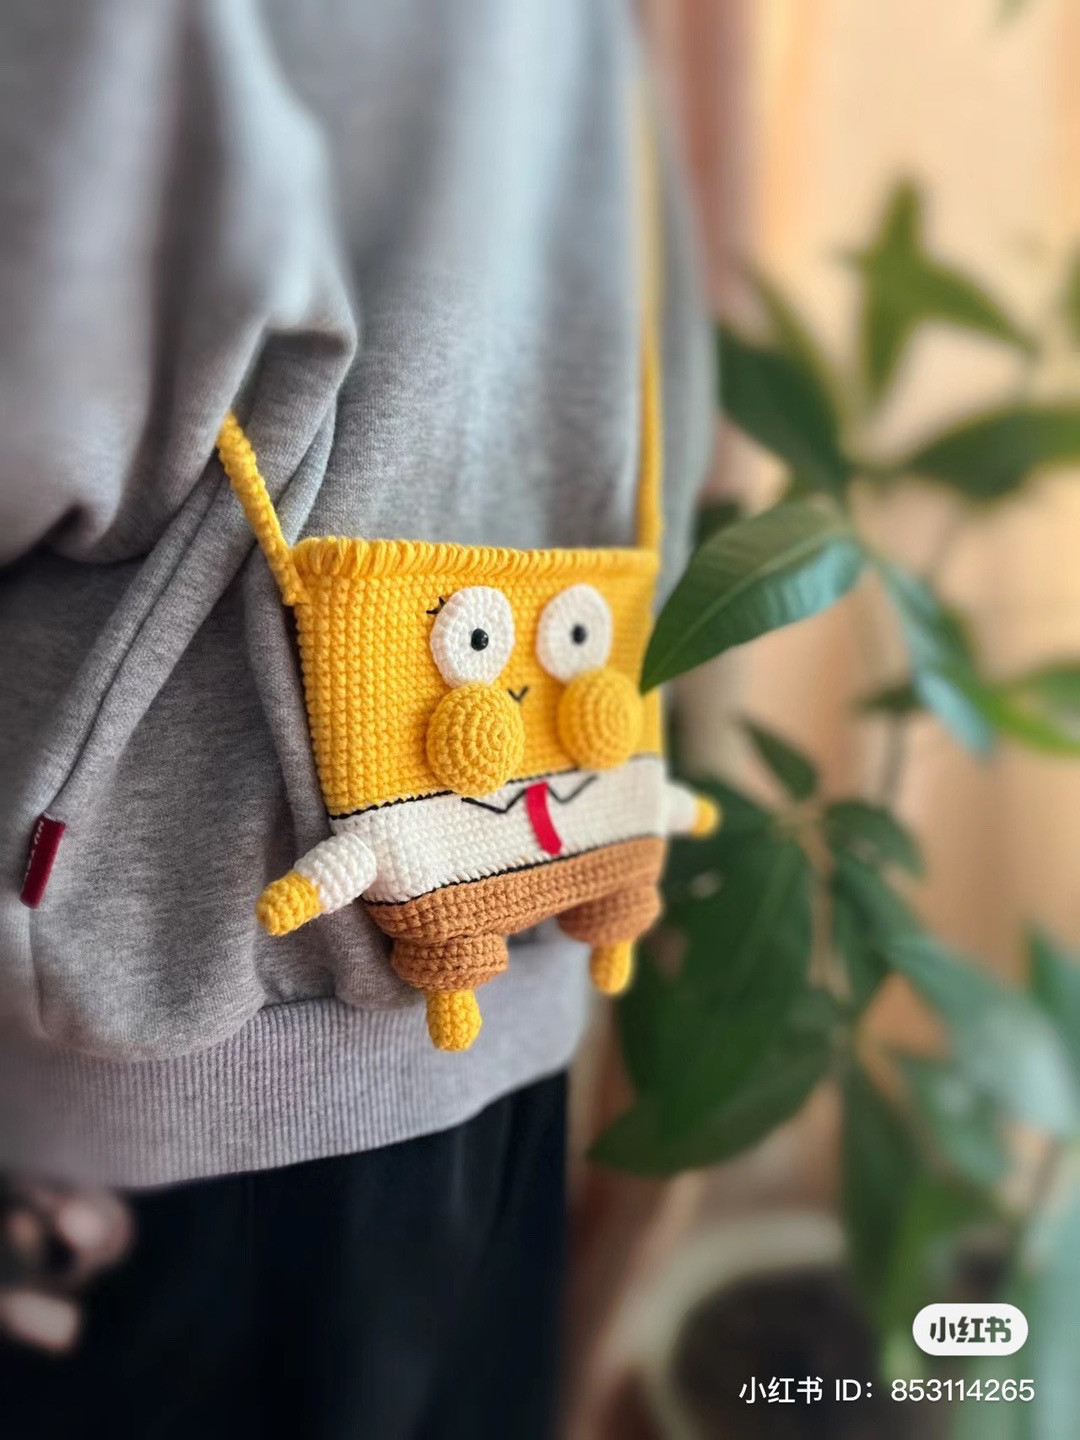 SpongeBob SquarePants backpack crochet pattern